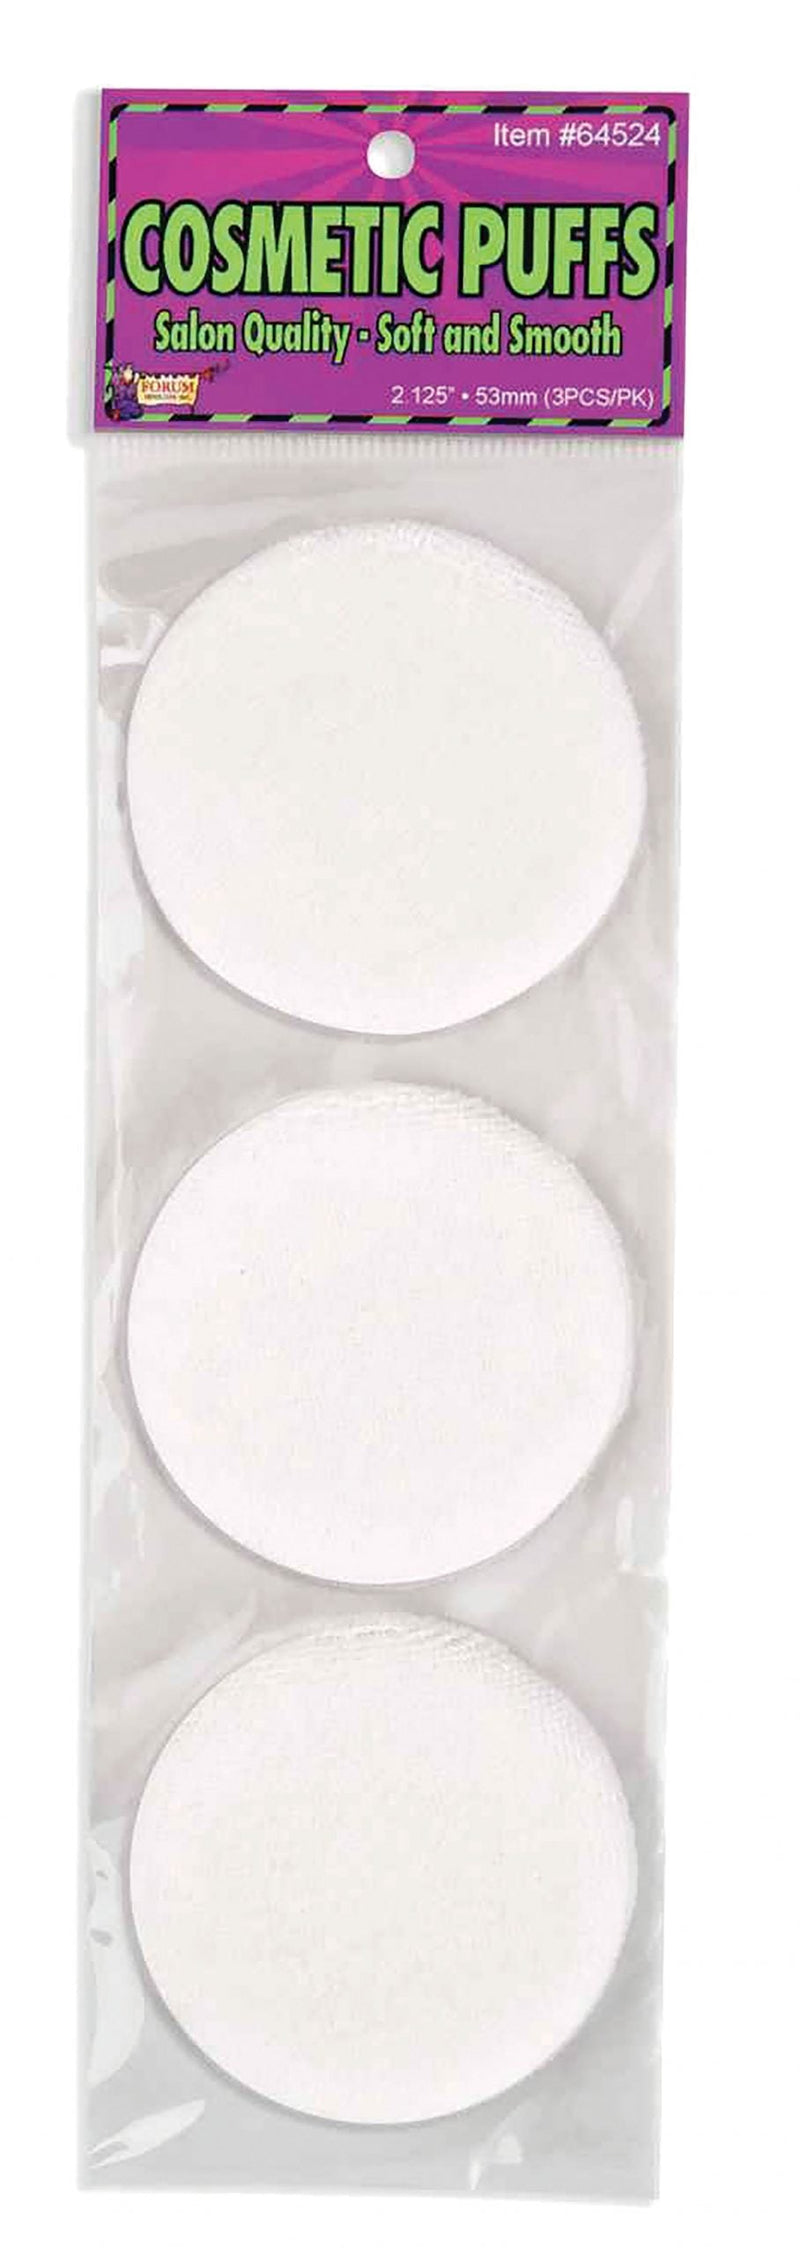 Cosmetic Puffs 3 In Pkt White Make Up Unisex_1 MU077